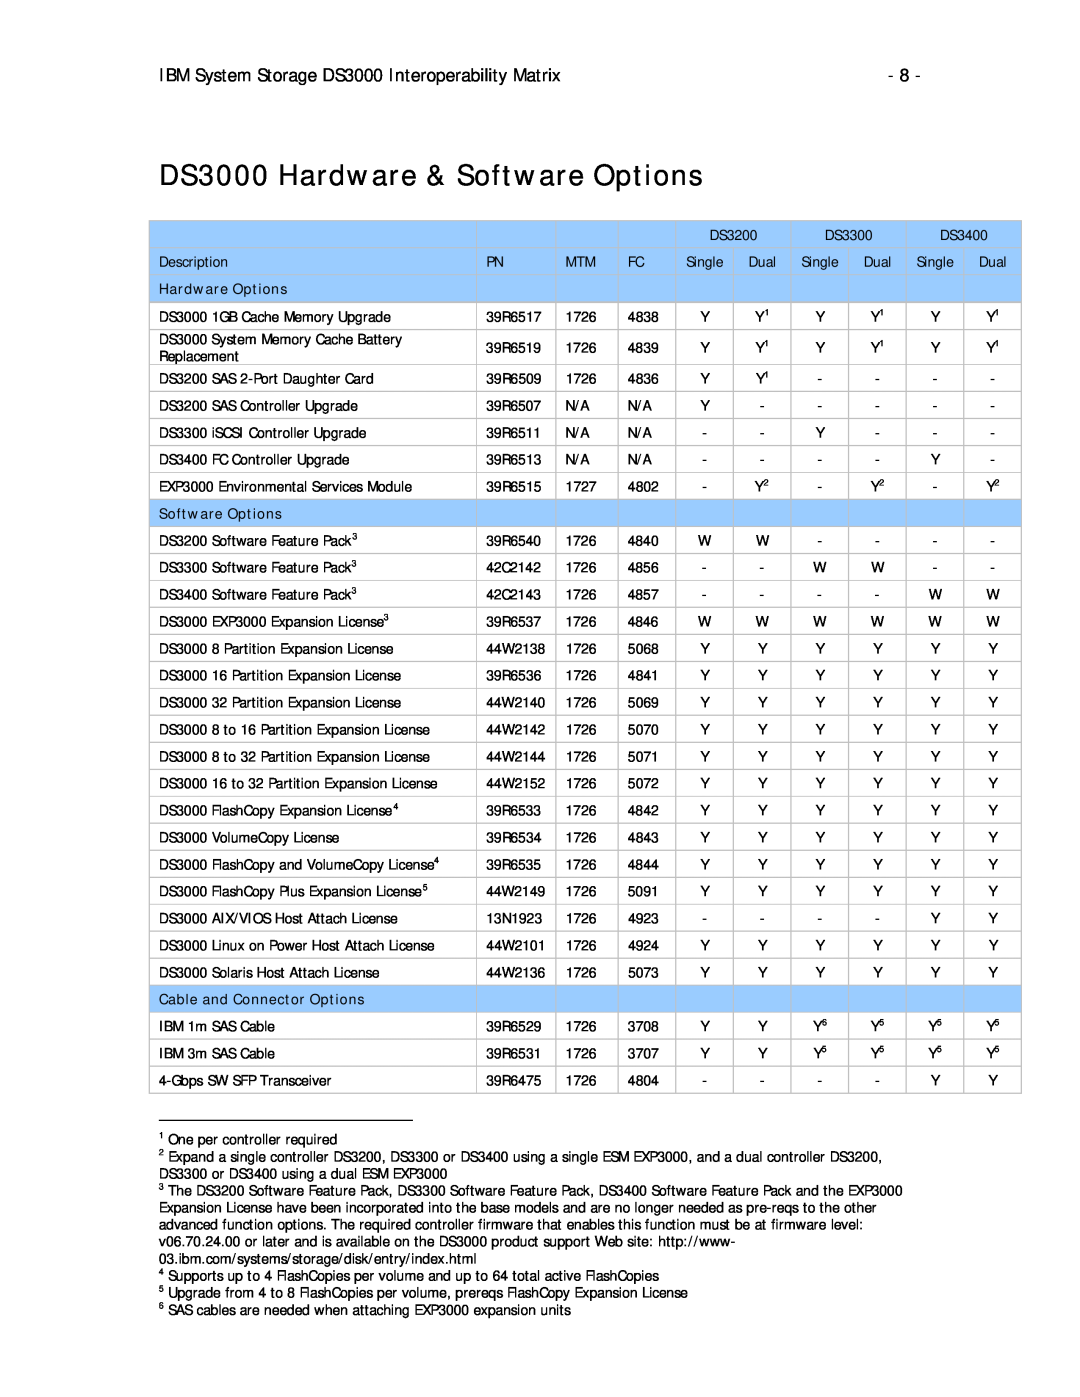 IBM DS3300, DS3200 DS3000 Hardware & Software Options, IBM System Storage DS3000 Interoperability Matrix, Hardware Options 